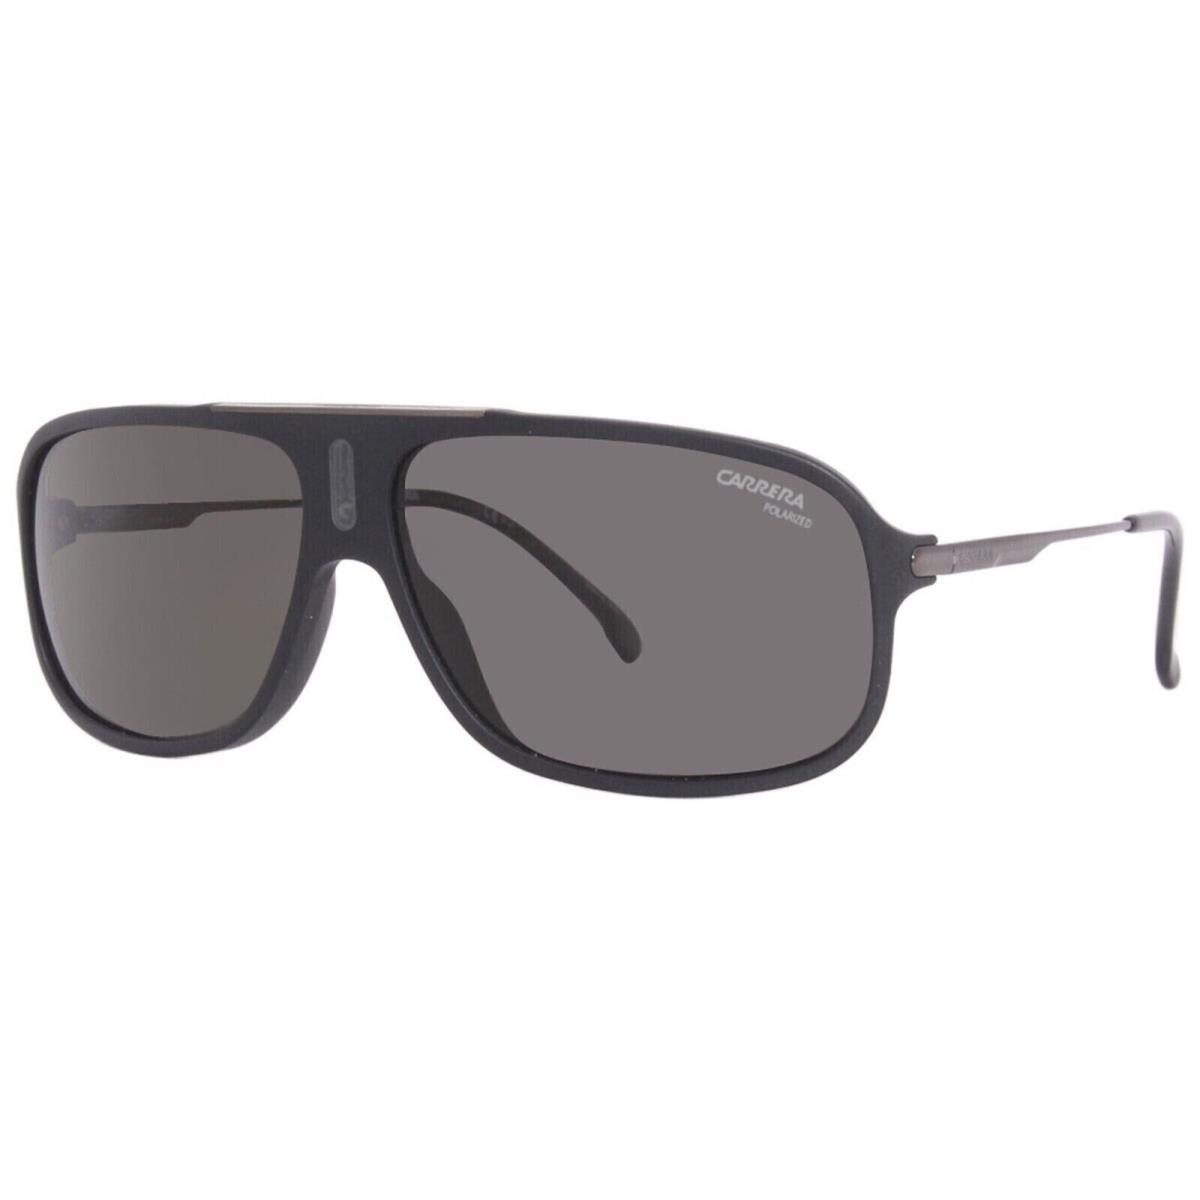 Carrera Polarized Sunglasses Cool65 003M9 Matte Black Frame W/ Grey Lens 64MM - Frame: Matte Black, Lens: GREY POLARIZED